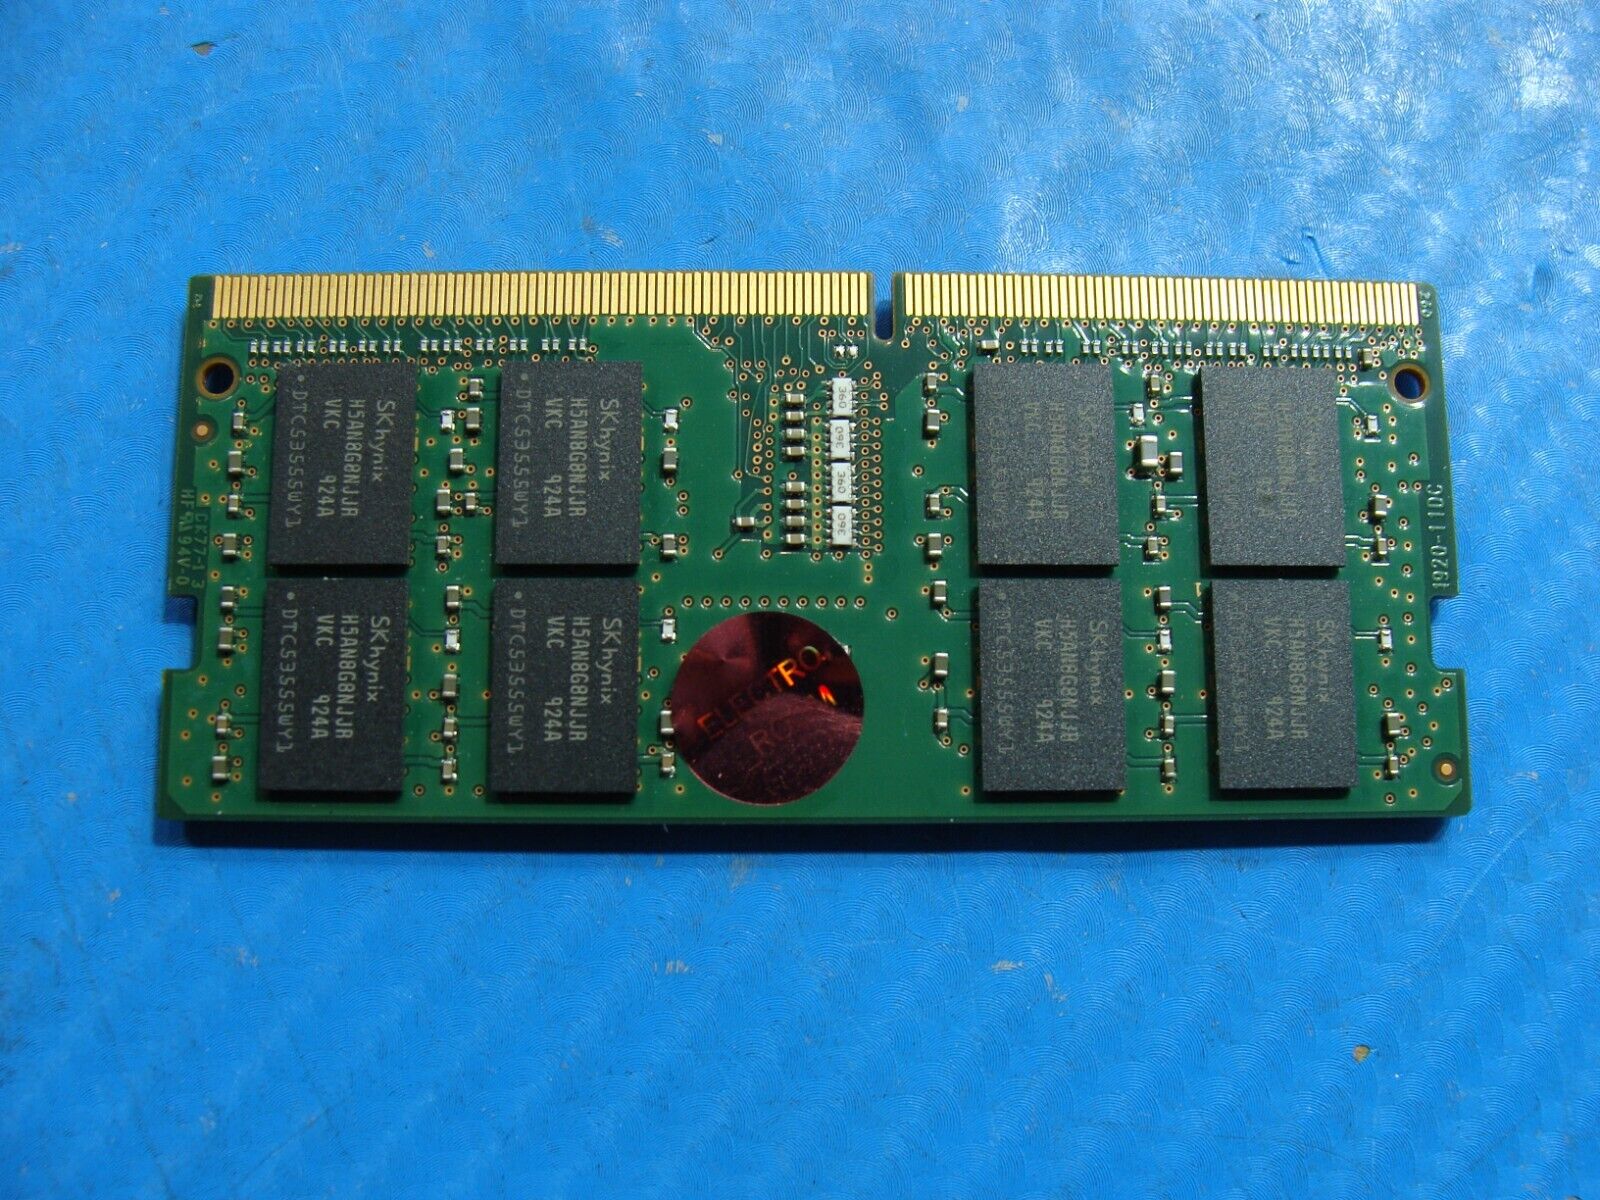 Dell 7400 SK Hynix 16GB 2Rx8 PC4-2666V SO-DIMM Memory RAM HMA82GS6JJR8N-VK